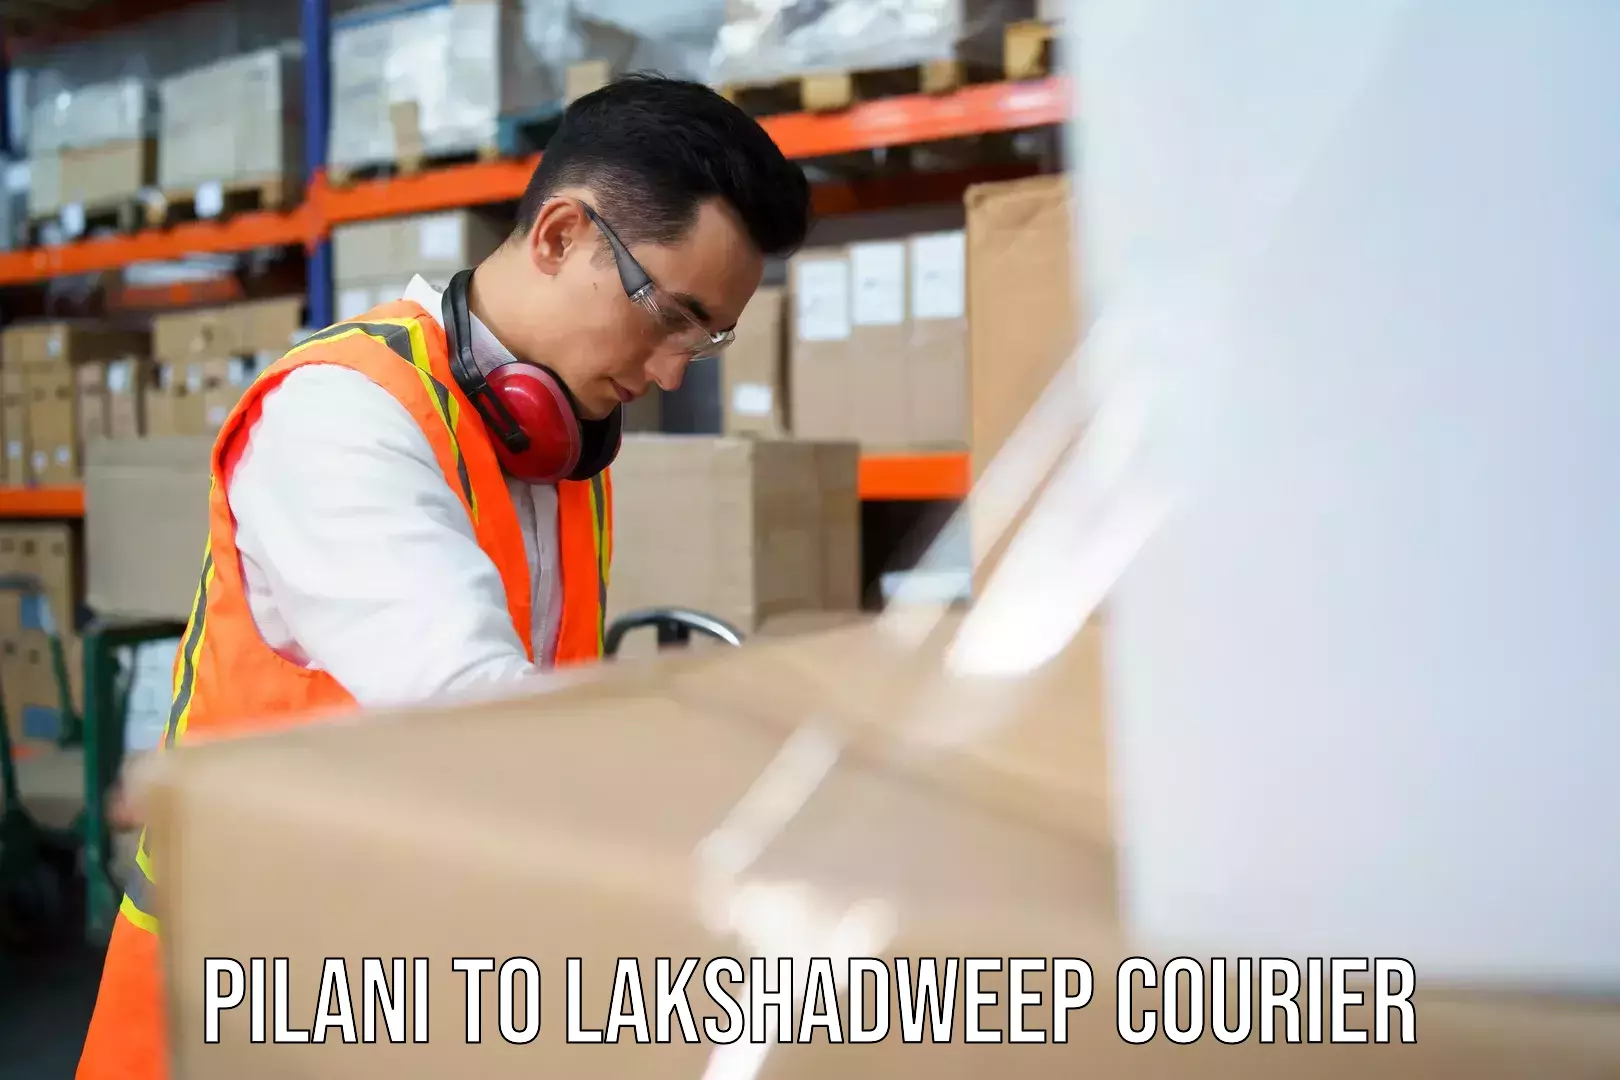 Courier service partnerships Pilani to Lakshadweep